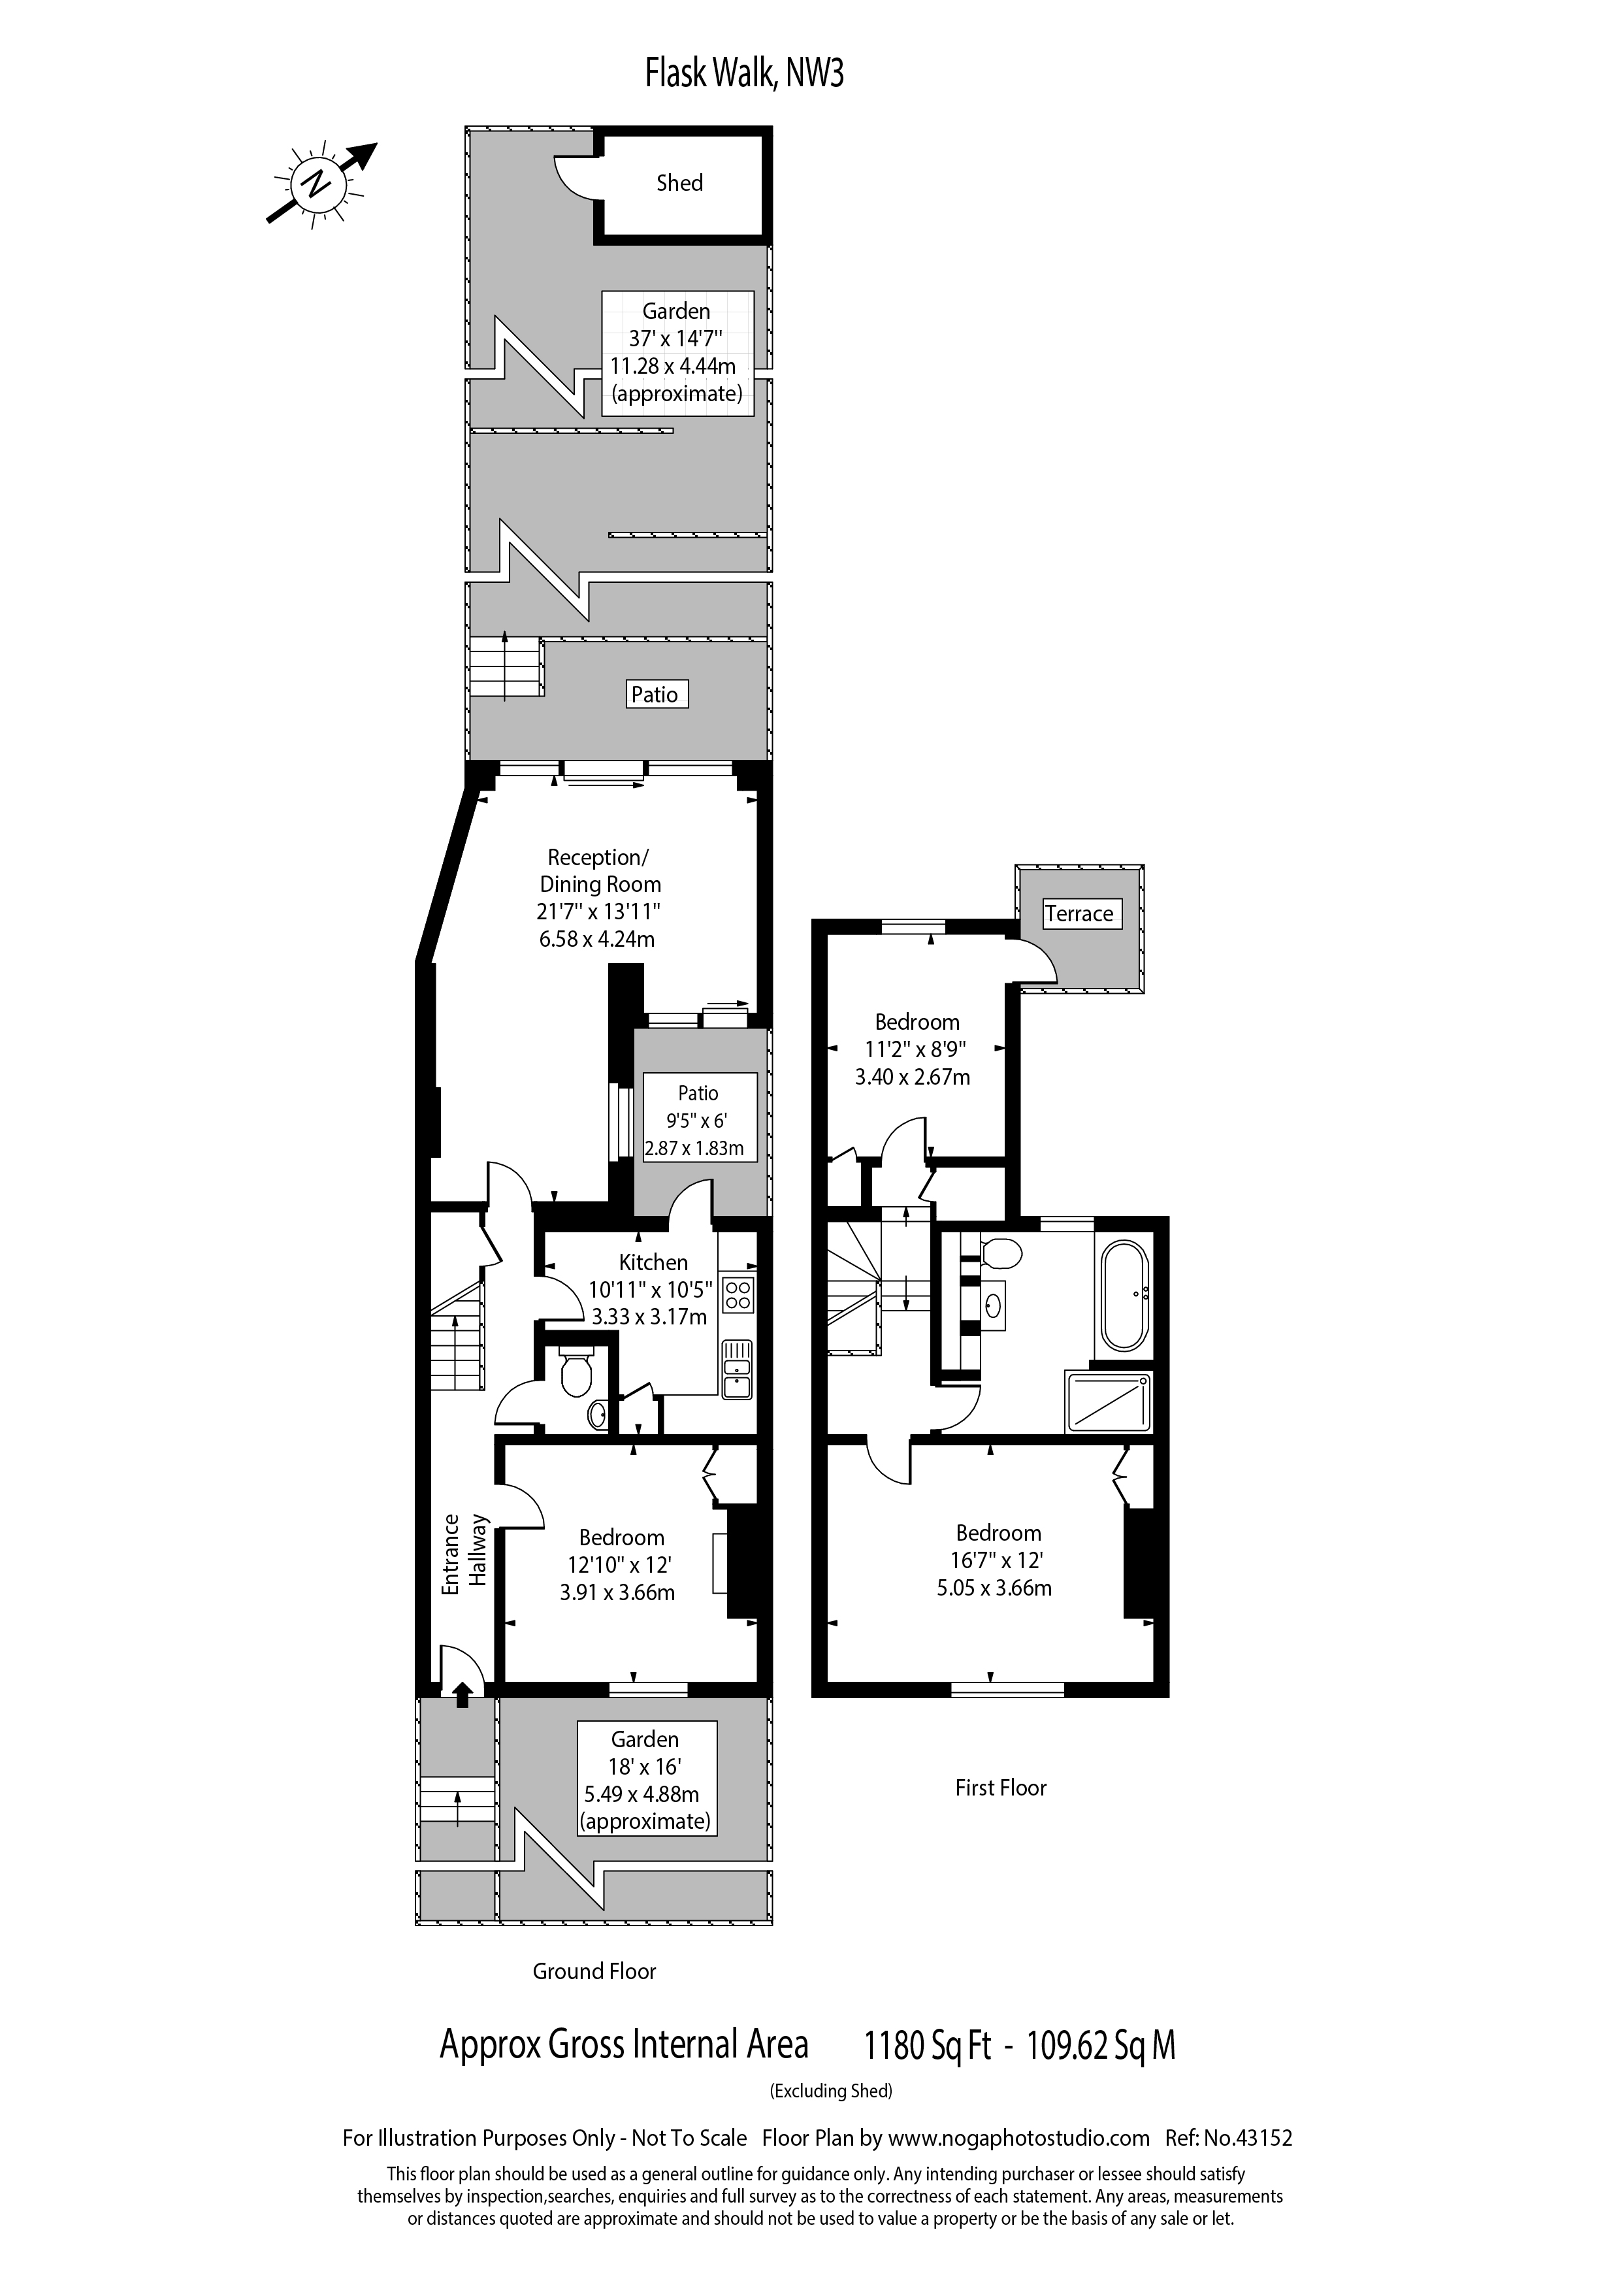 3 bedrooms apartments/flats to sale in Flask Walk, London-Floorplan